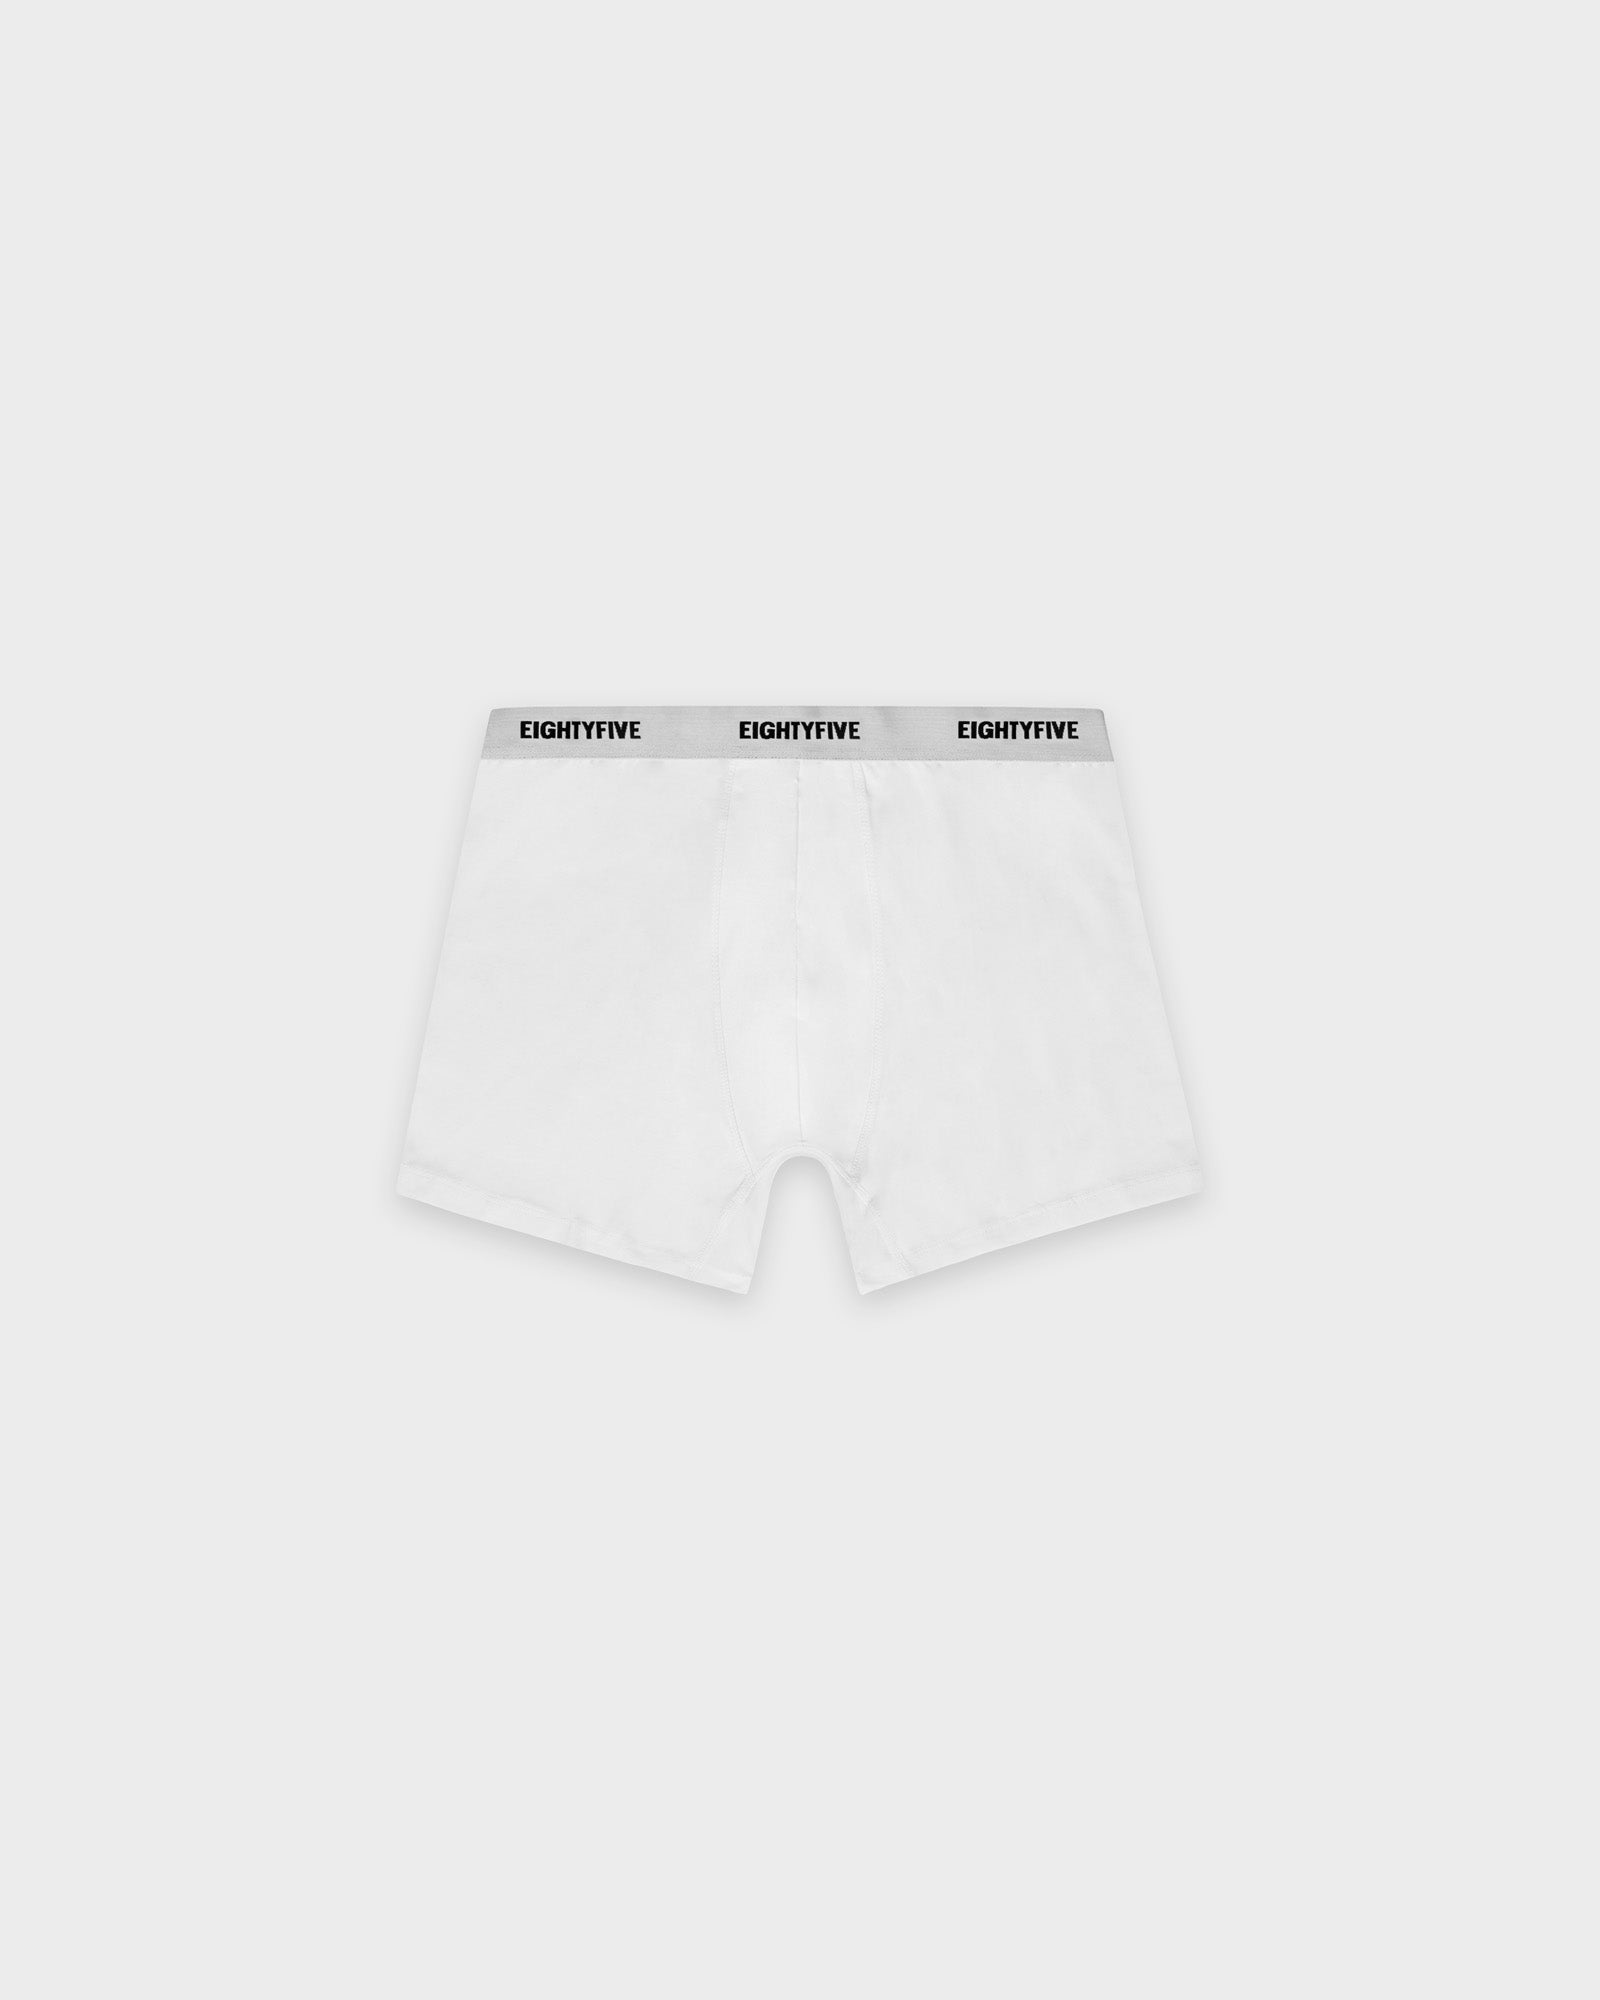 Boxer shorts 2 Pack White/Black